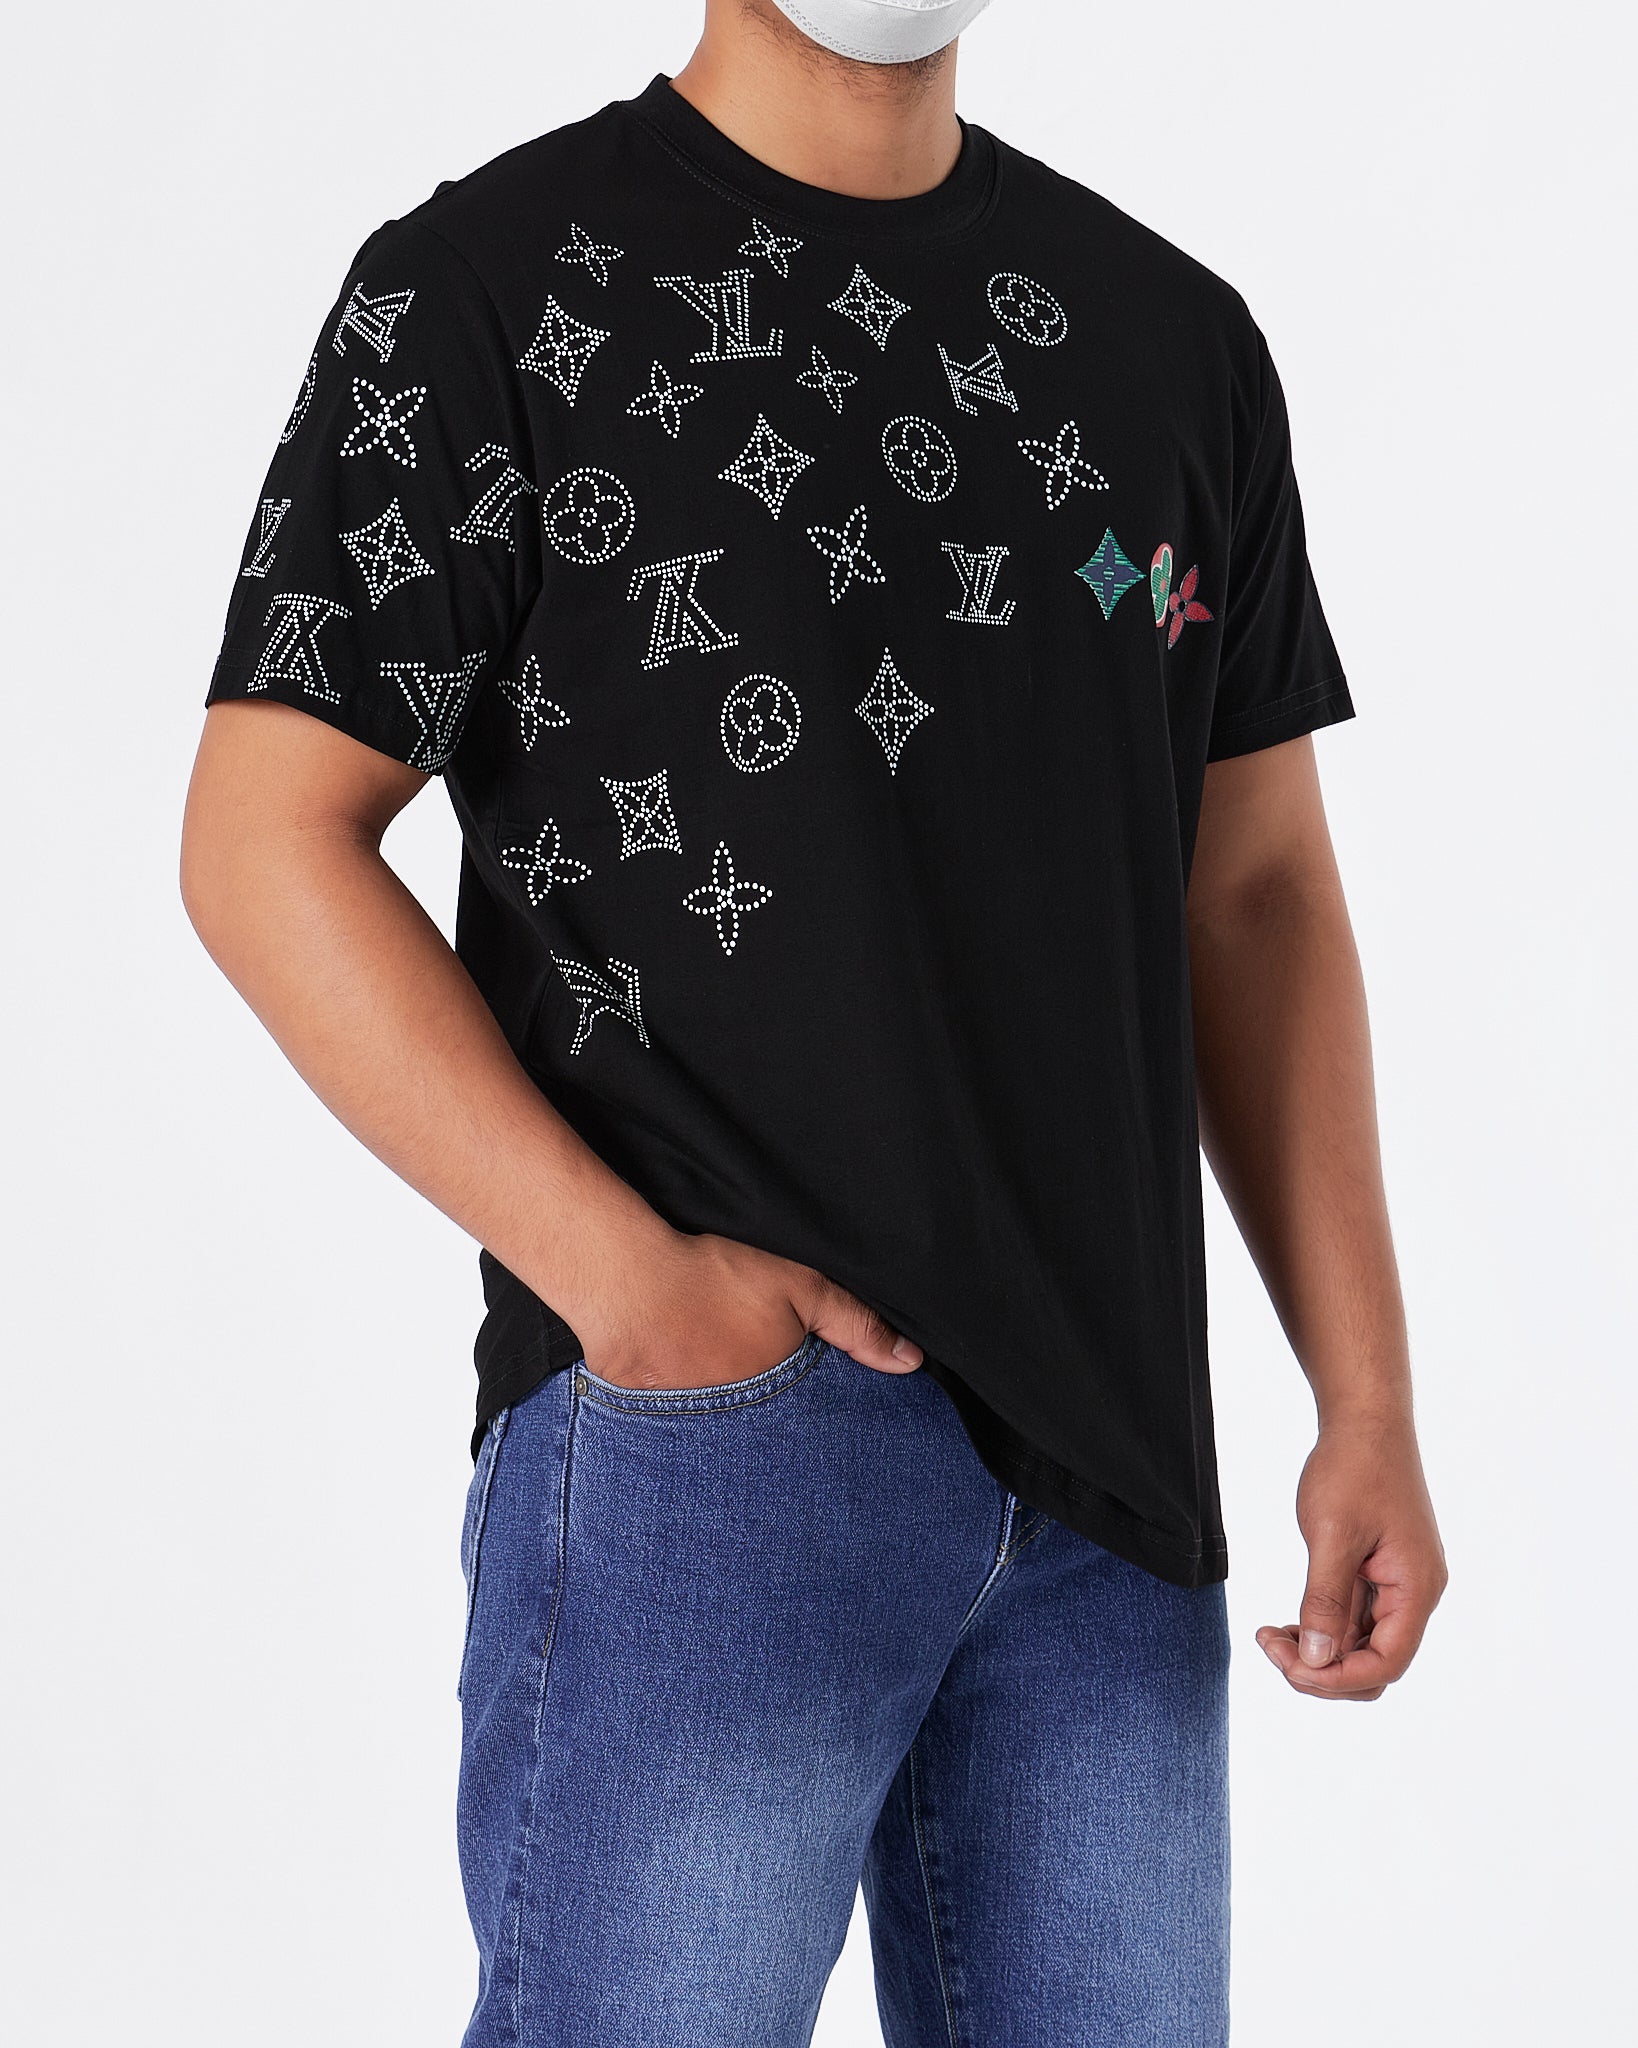 LV Monogram Embroidered Men Black T-Shirt 22.90